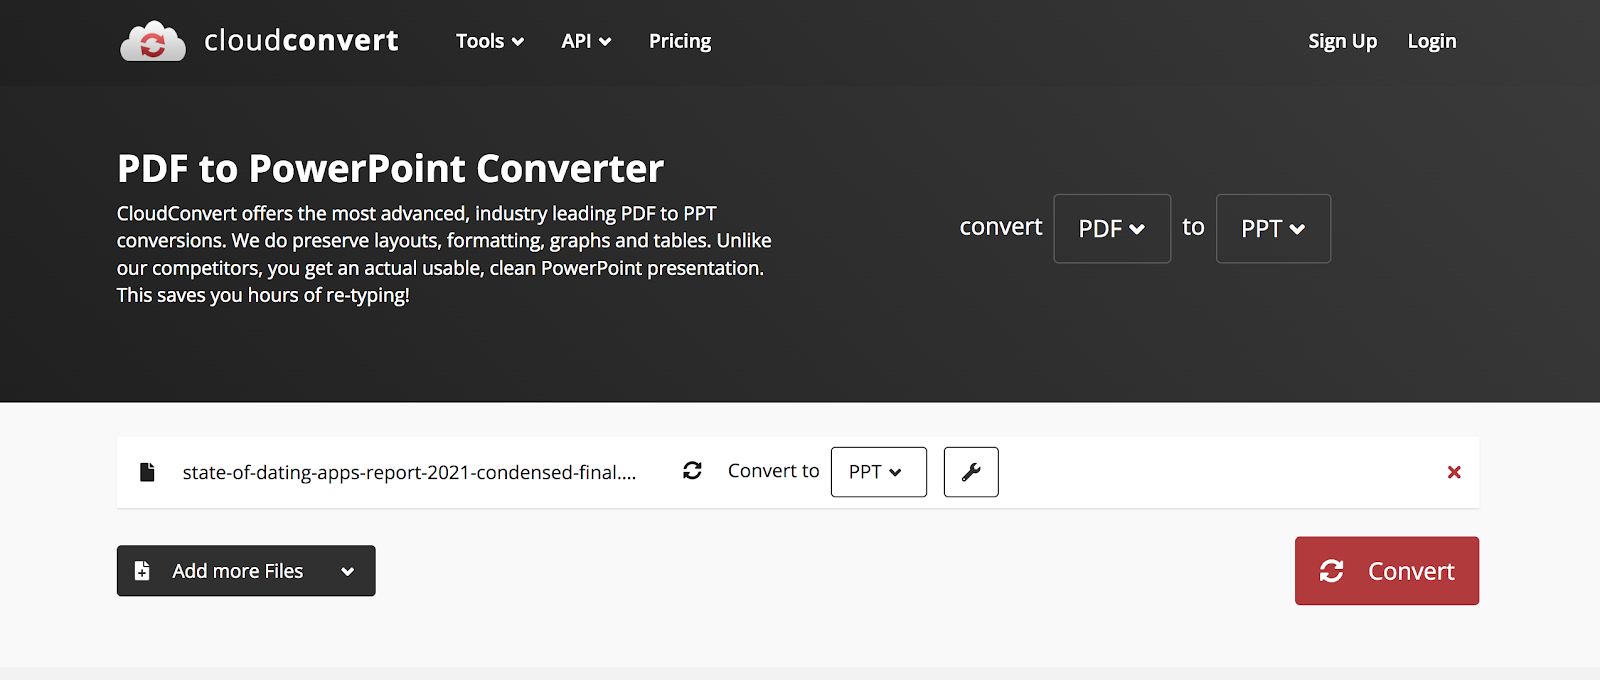 the conversion page of Cloudconvert 